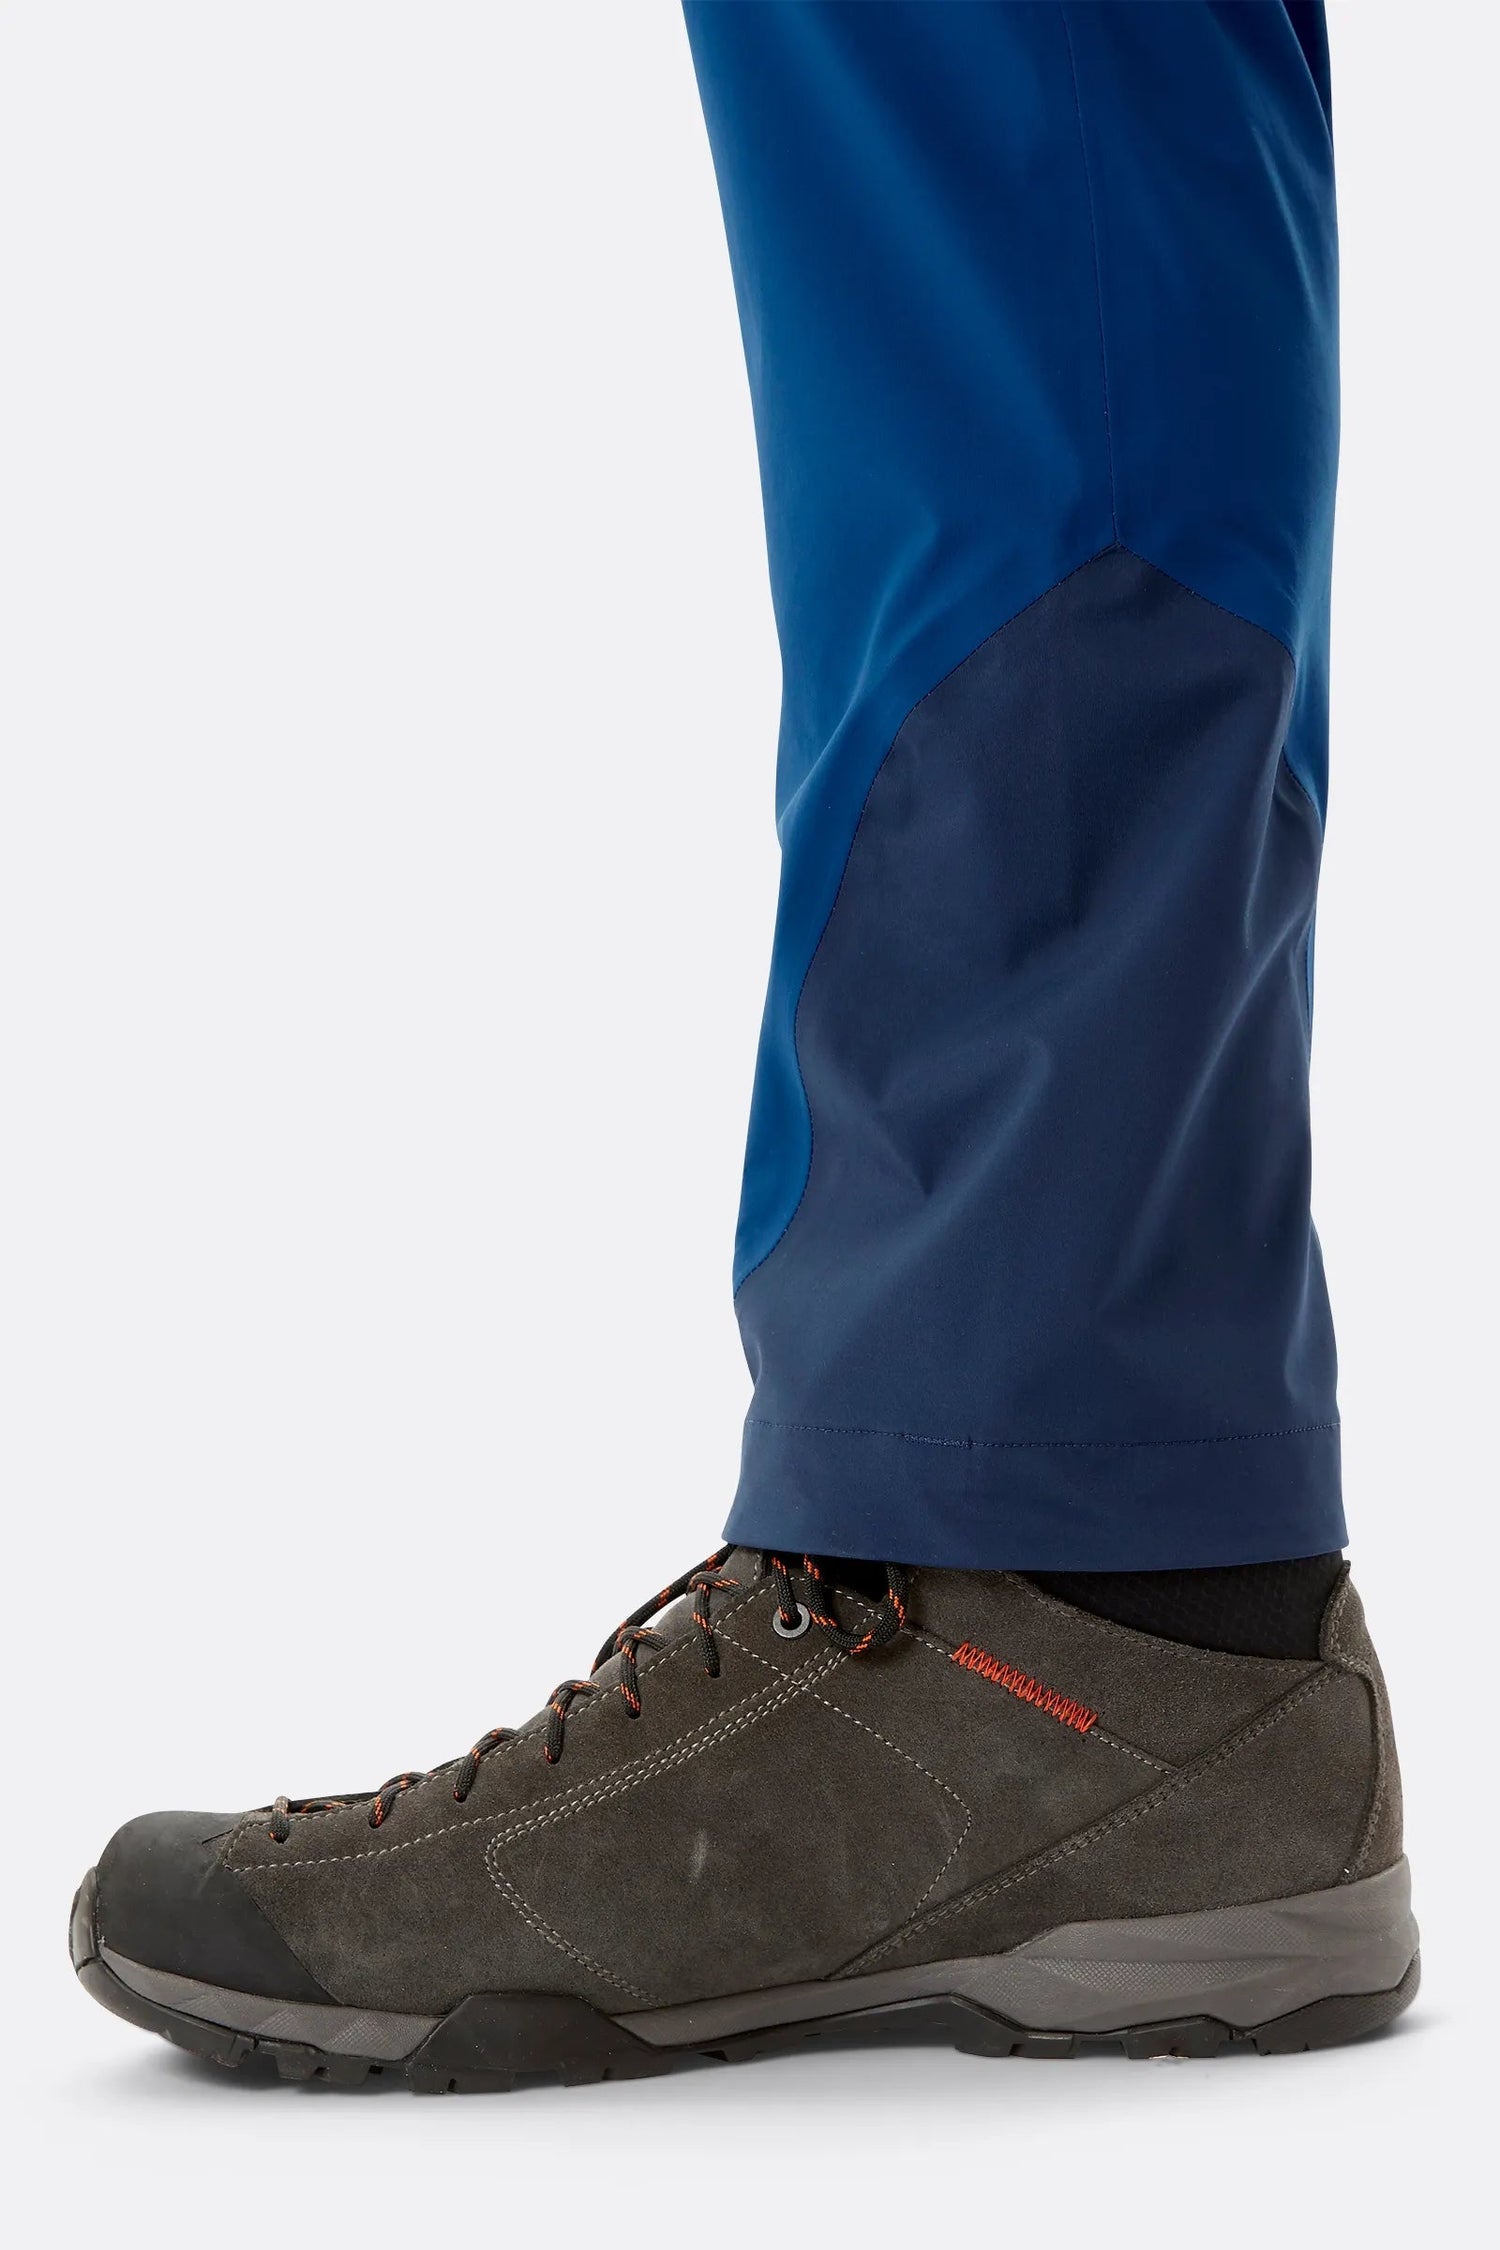 Rab - M's Kinetic 2.0 Pants - 3-layer Proflex™ Kinetic 2.0 fabric - Weekendbee - sustainable sportswear